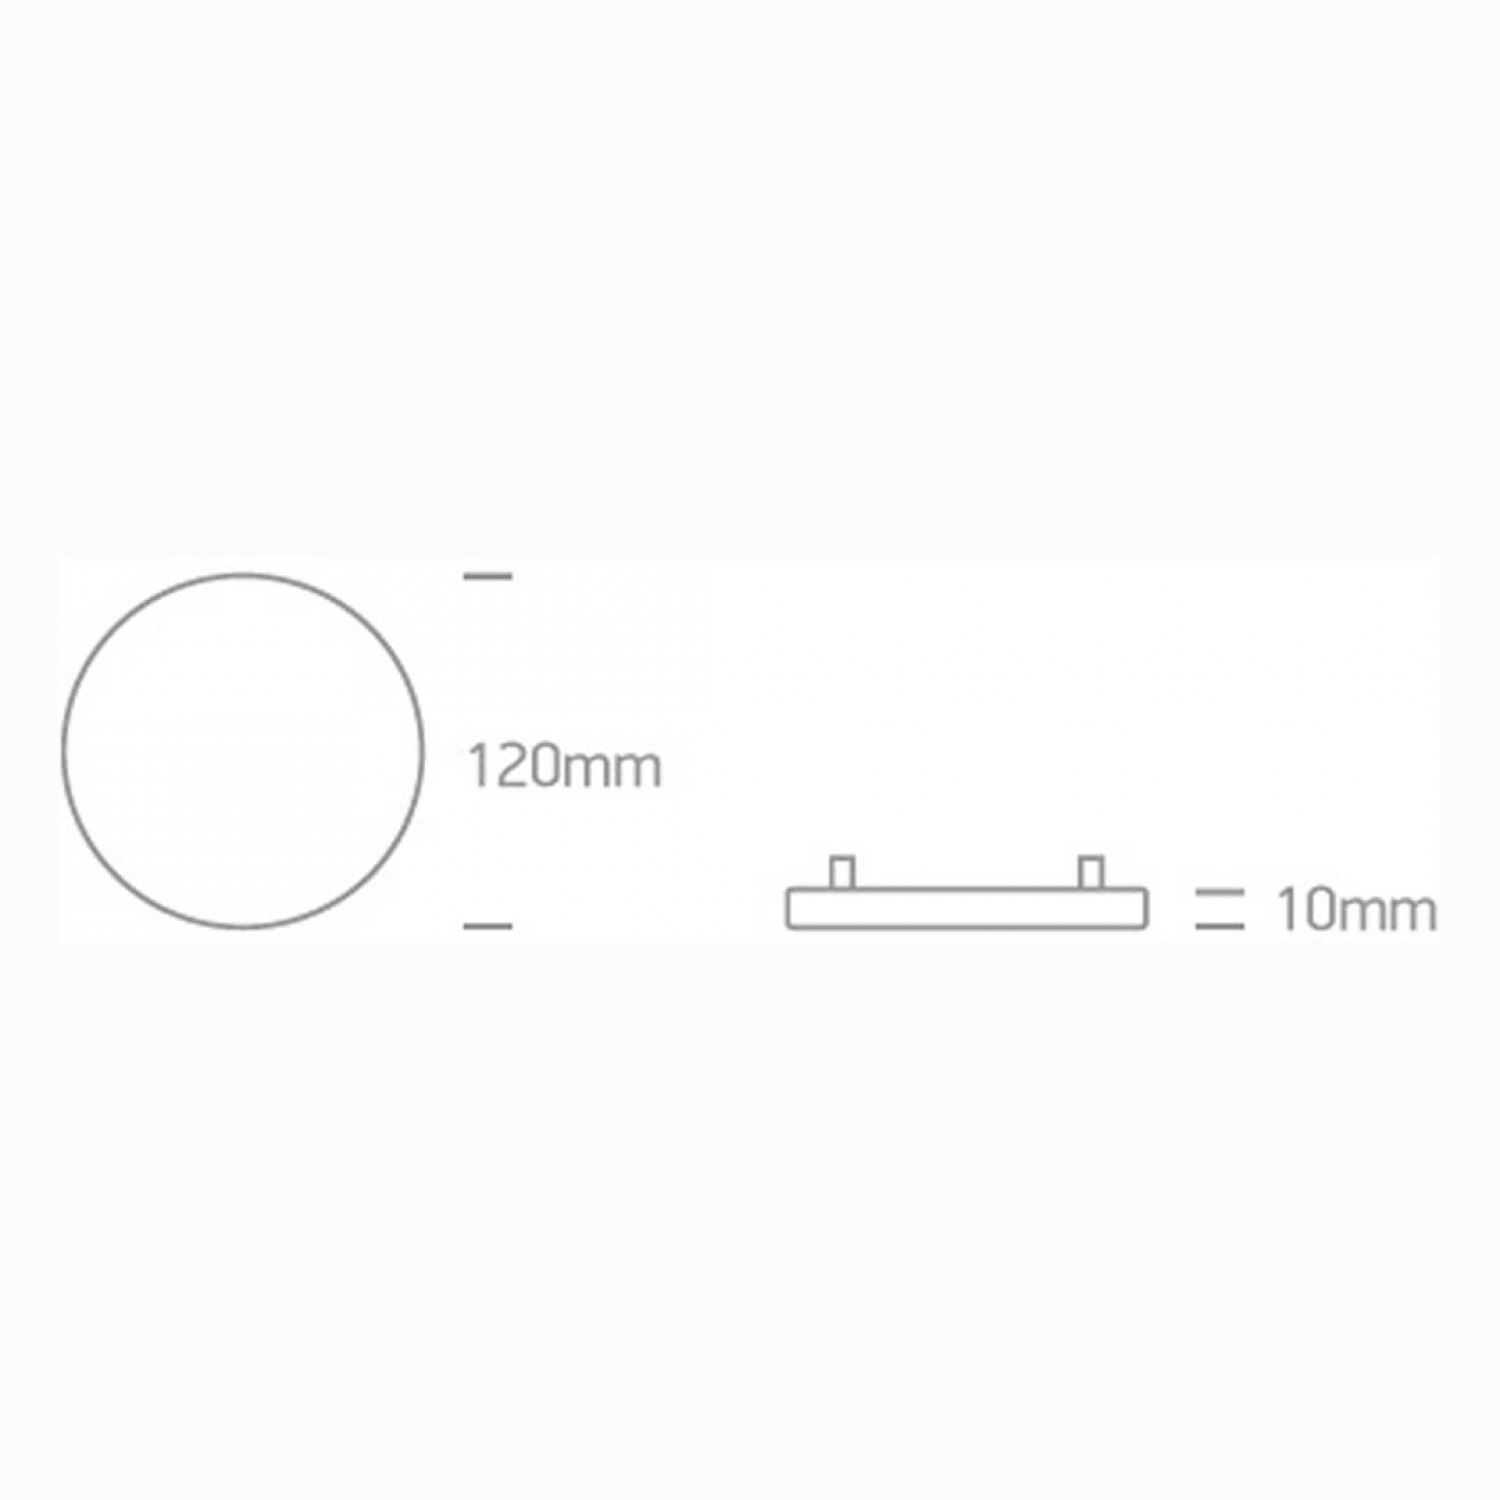 Точечный светильник ONE Light Floating Panels Range Adjustable Cut Out Hole 10110CE/C